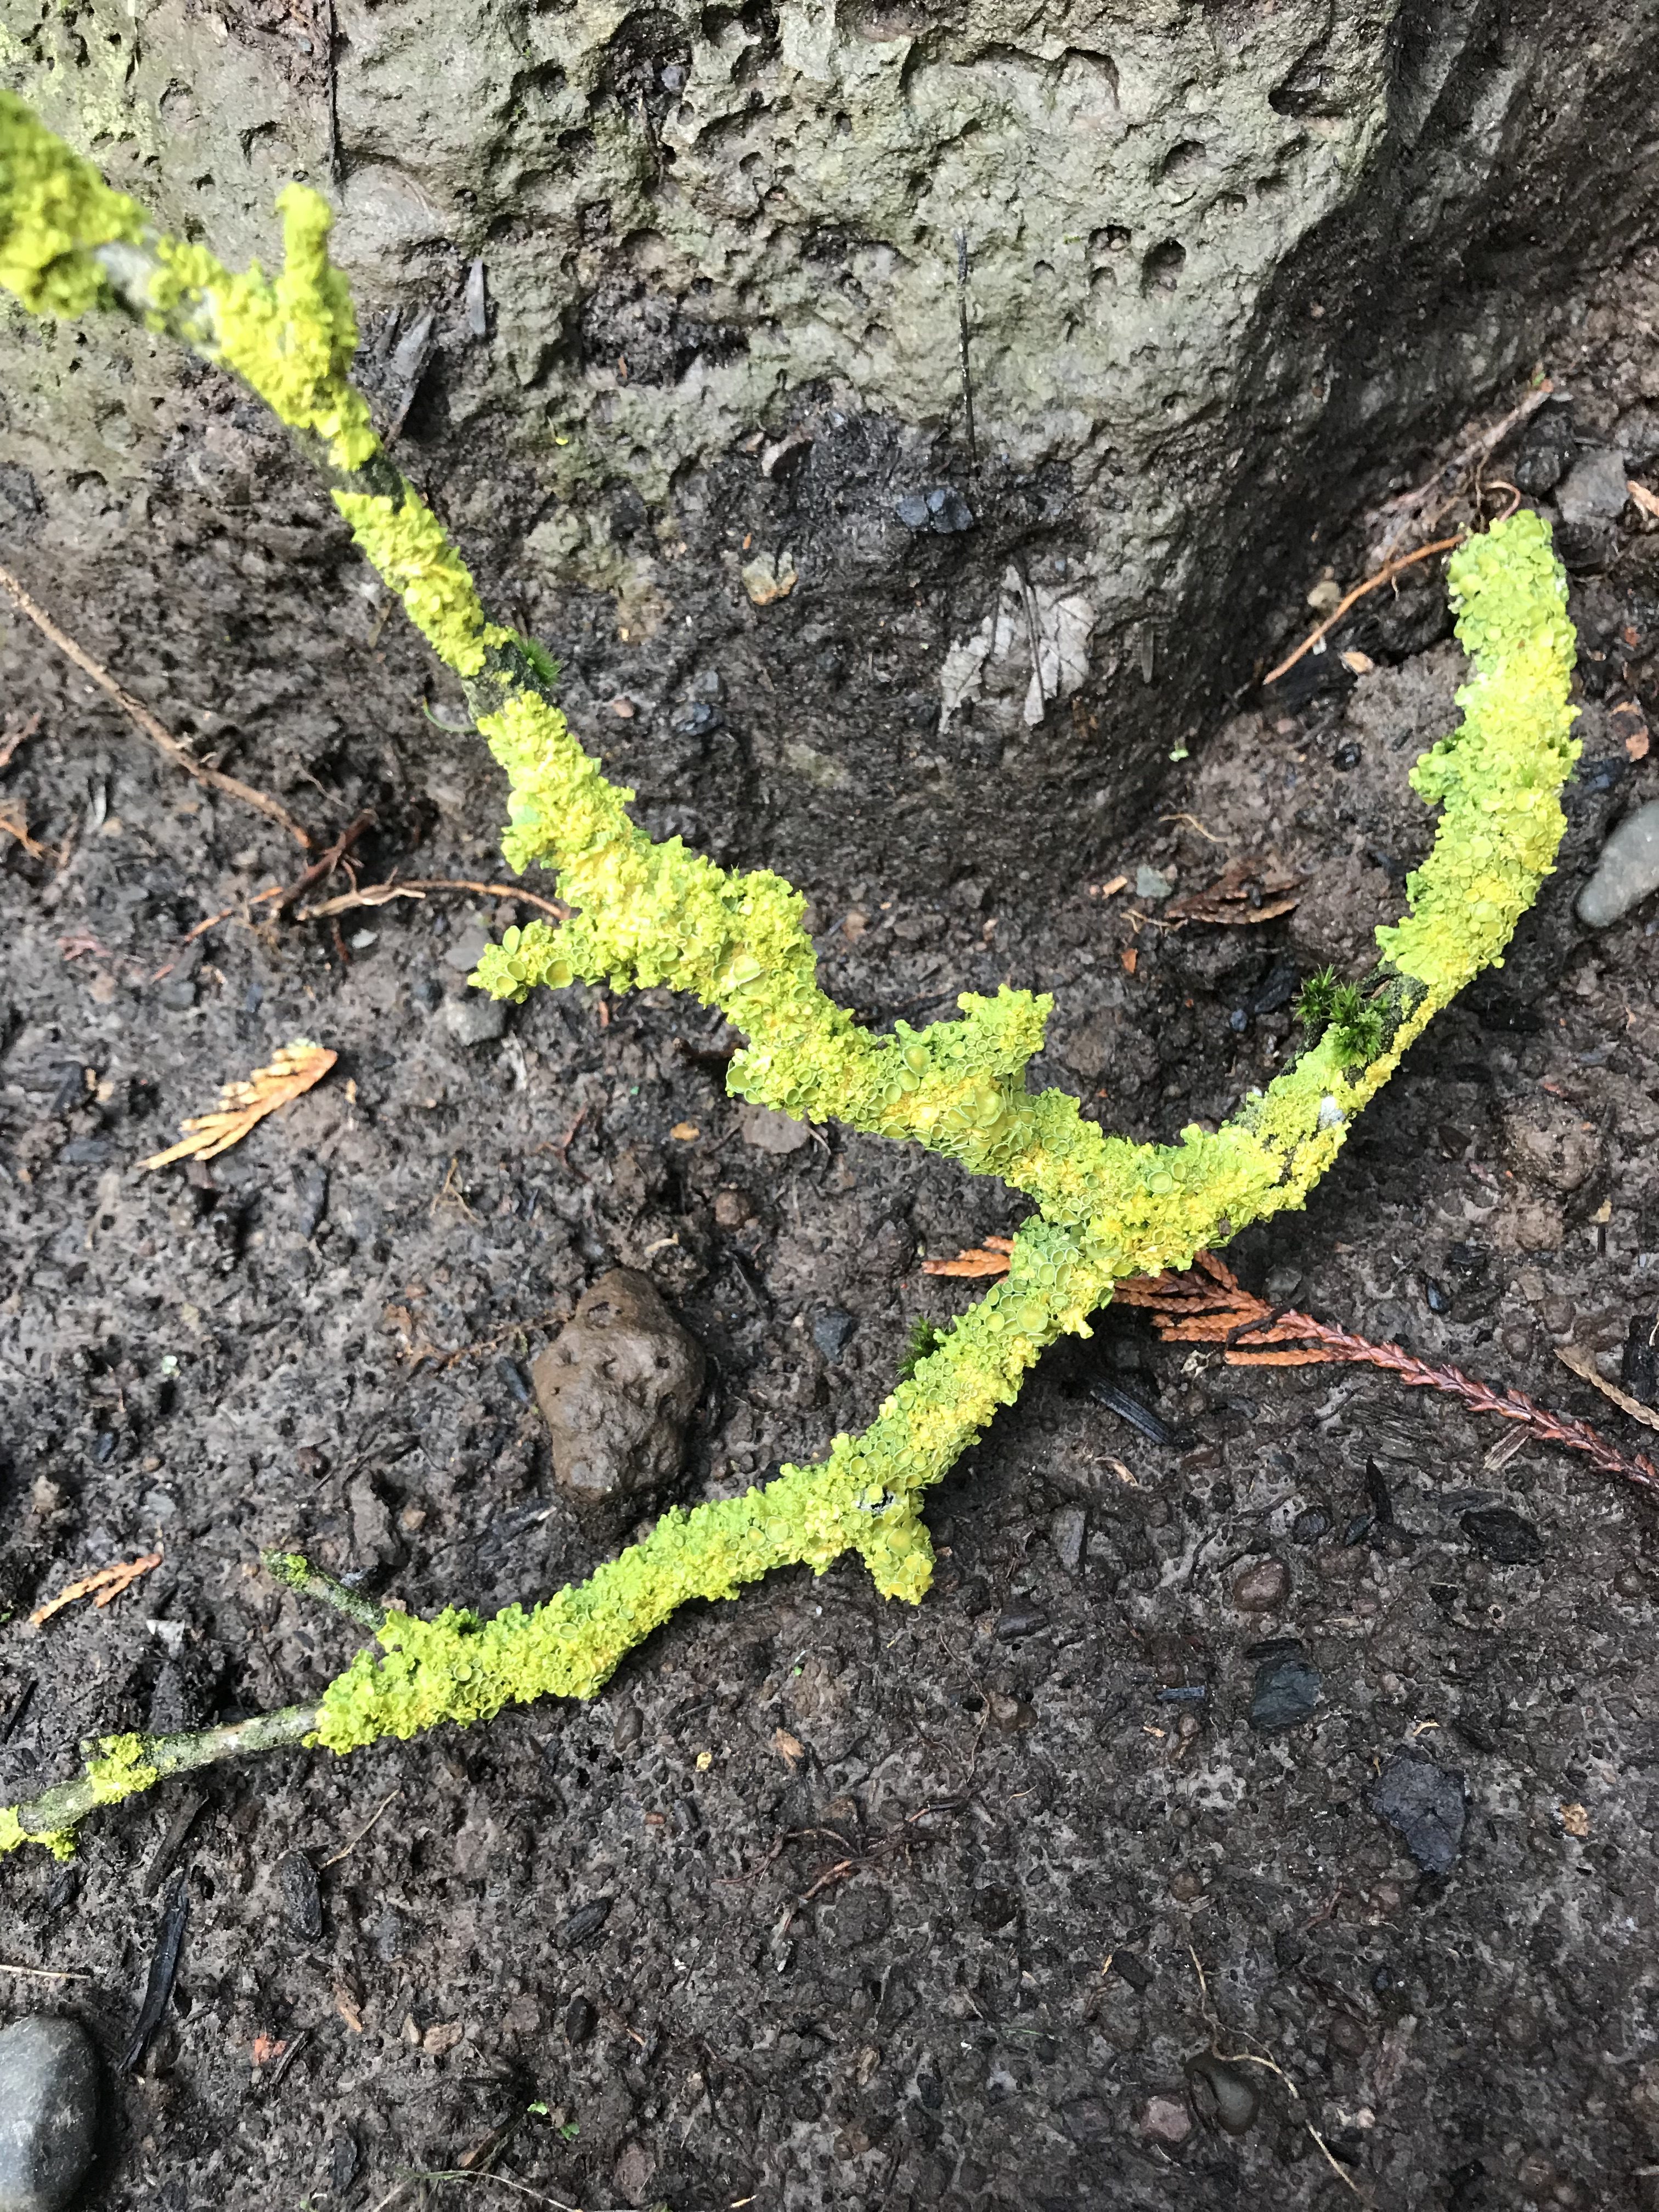 Mossy stick on rock